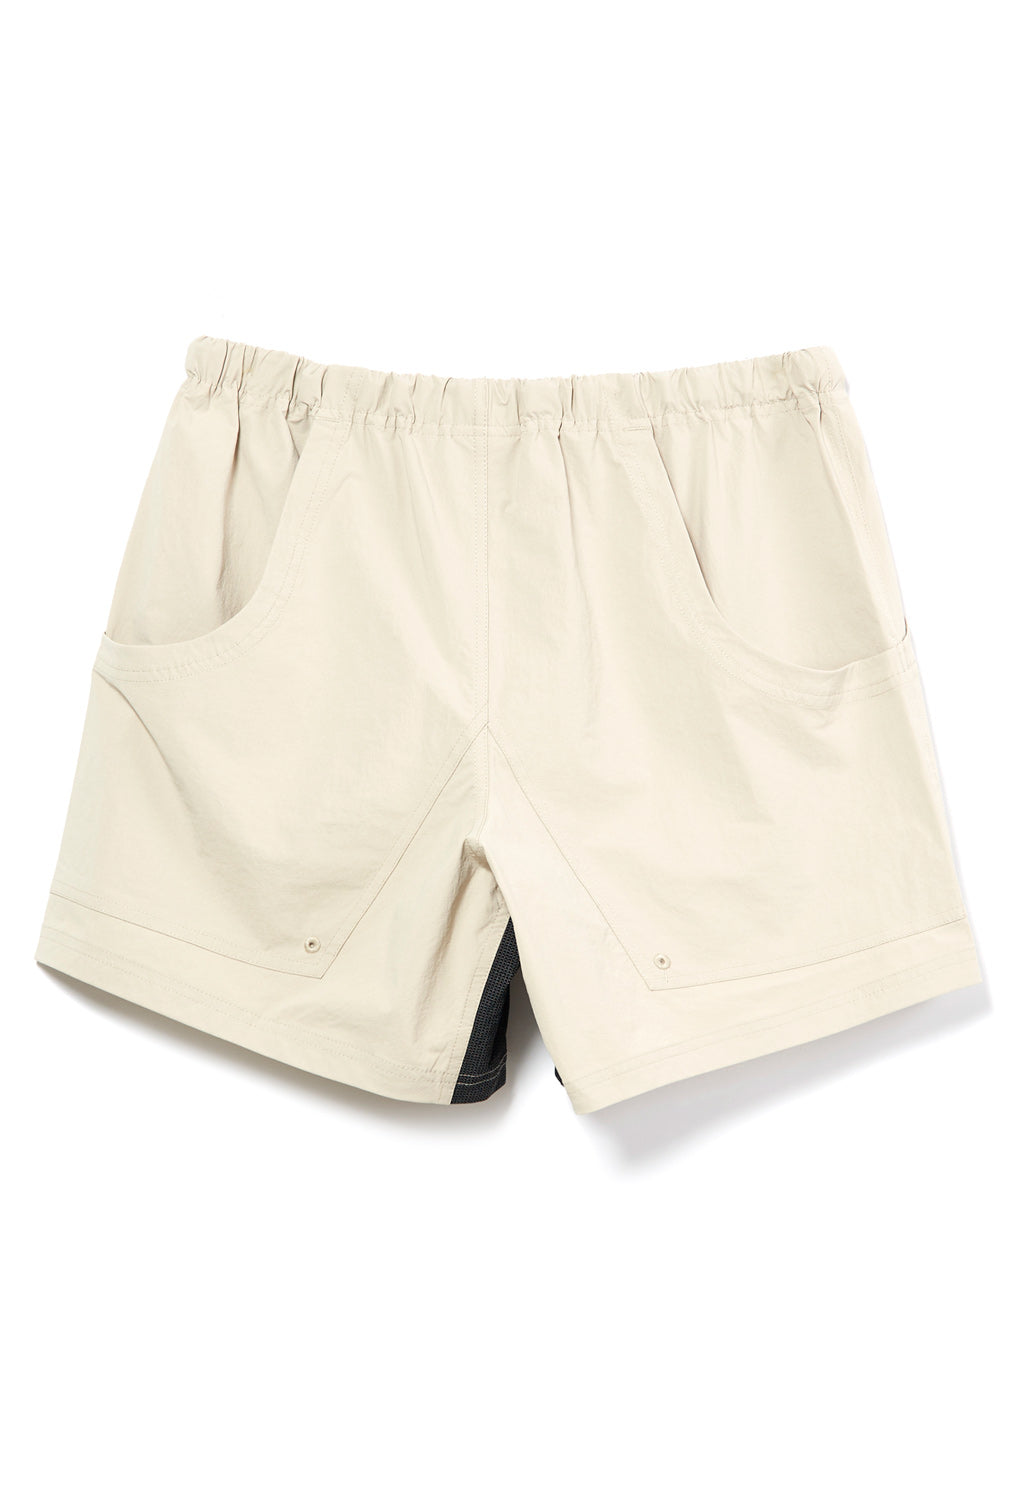 Pa'lante Packs Men's Shorts - Oat